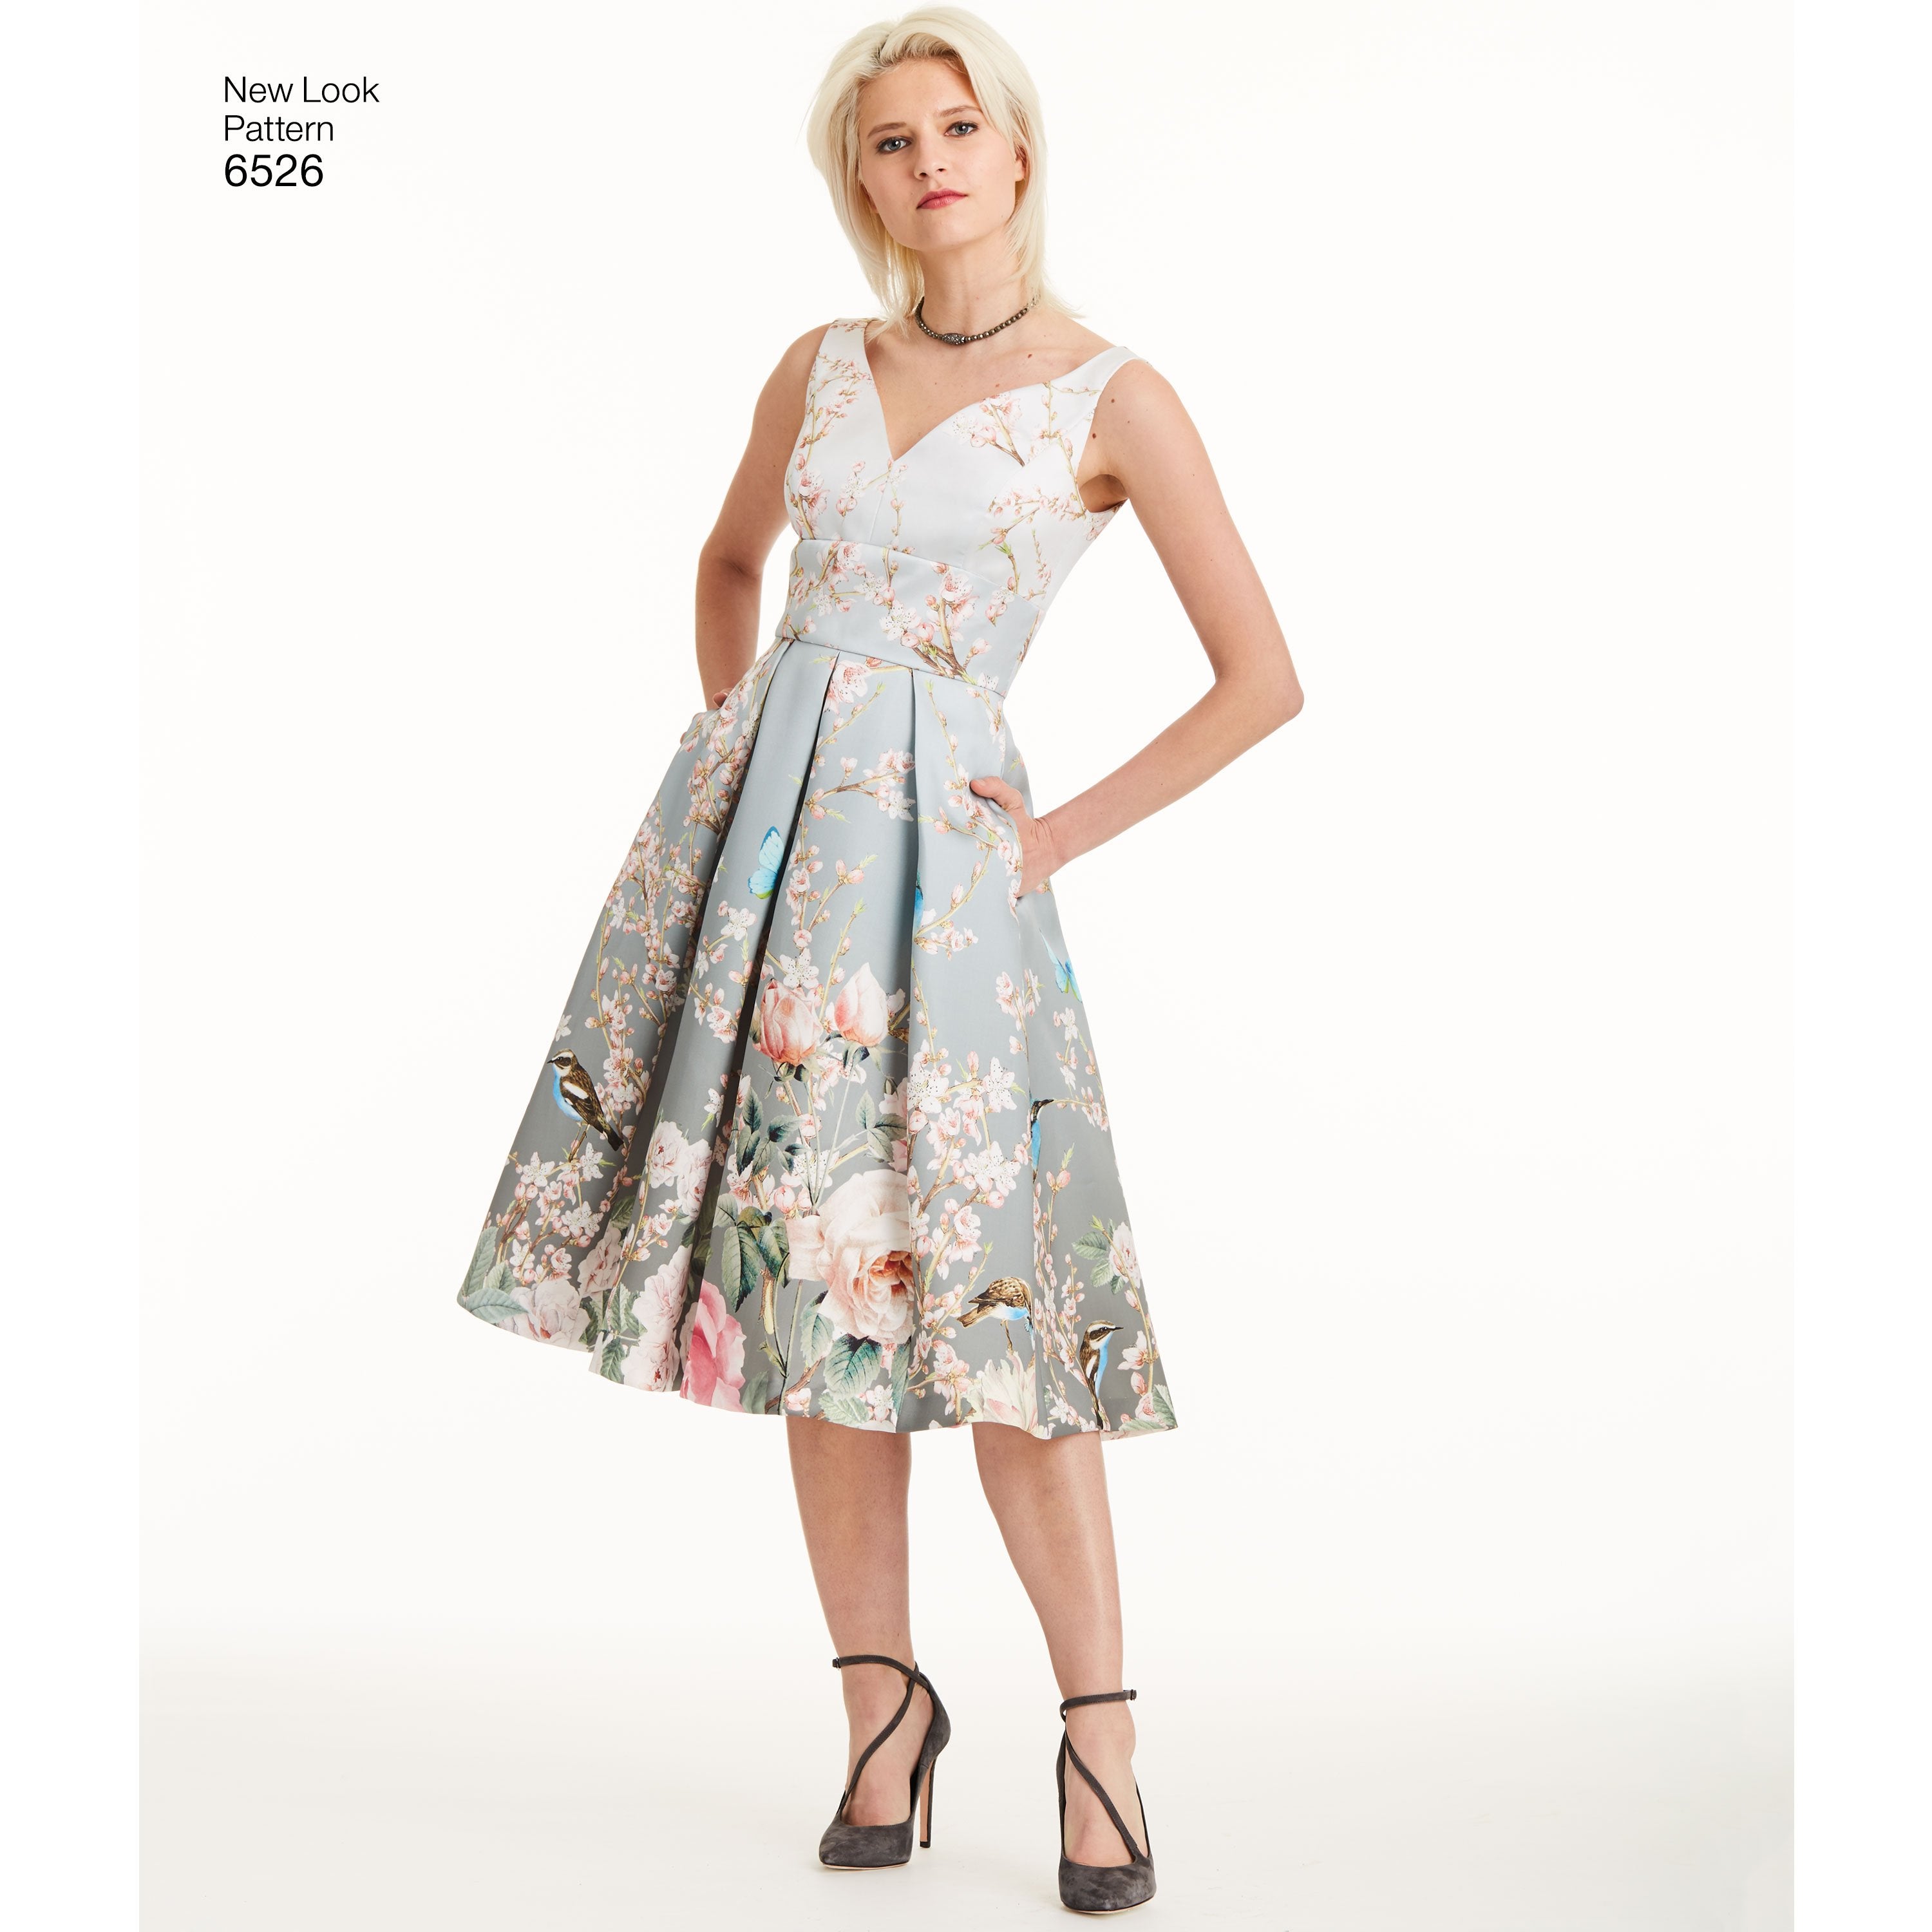 NL6526 Women's Dress Pattern from Jaycotts Sewing Supplies